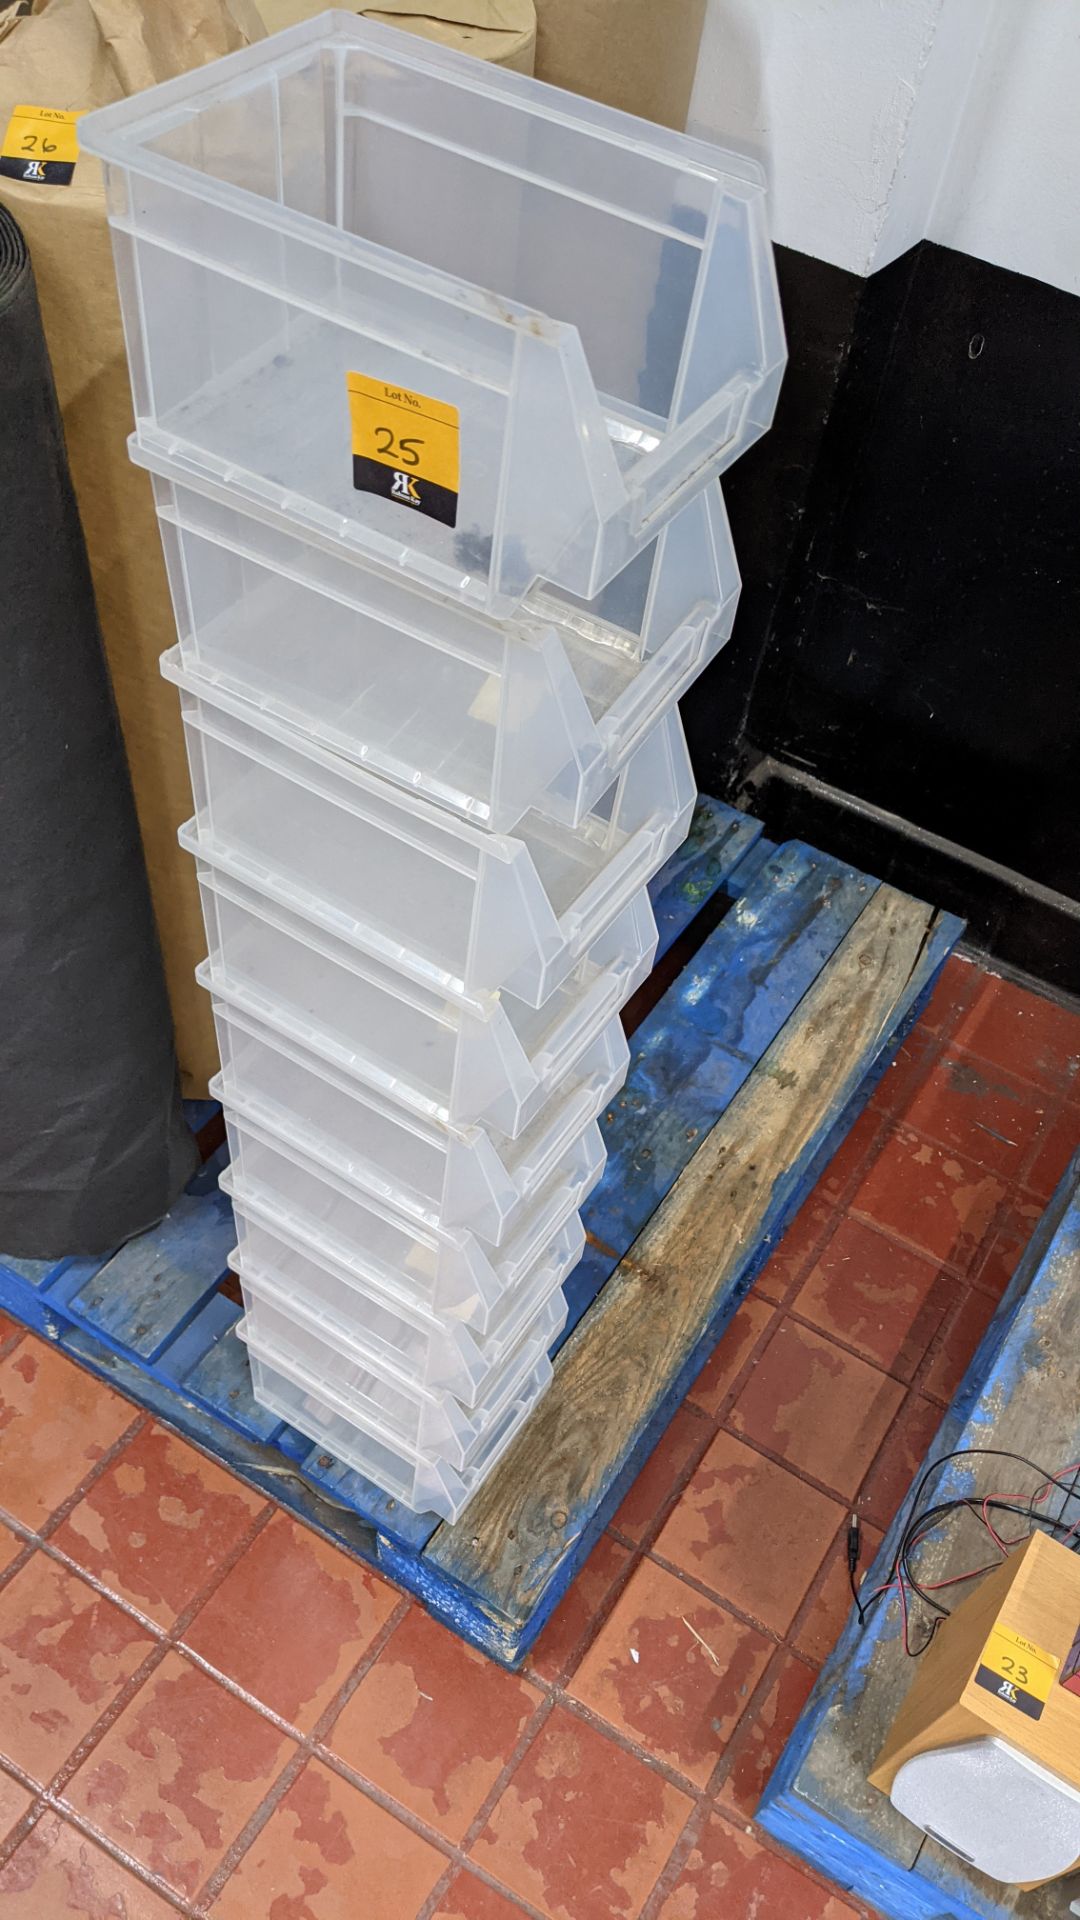 9 off plastic storage bins - Image 2 of 3